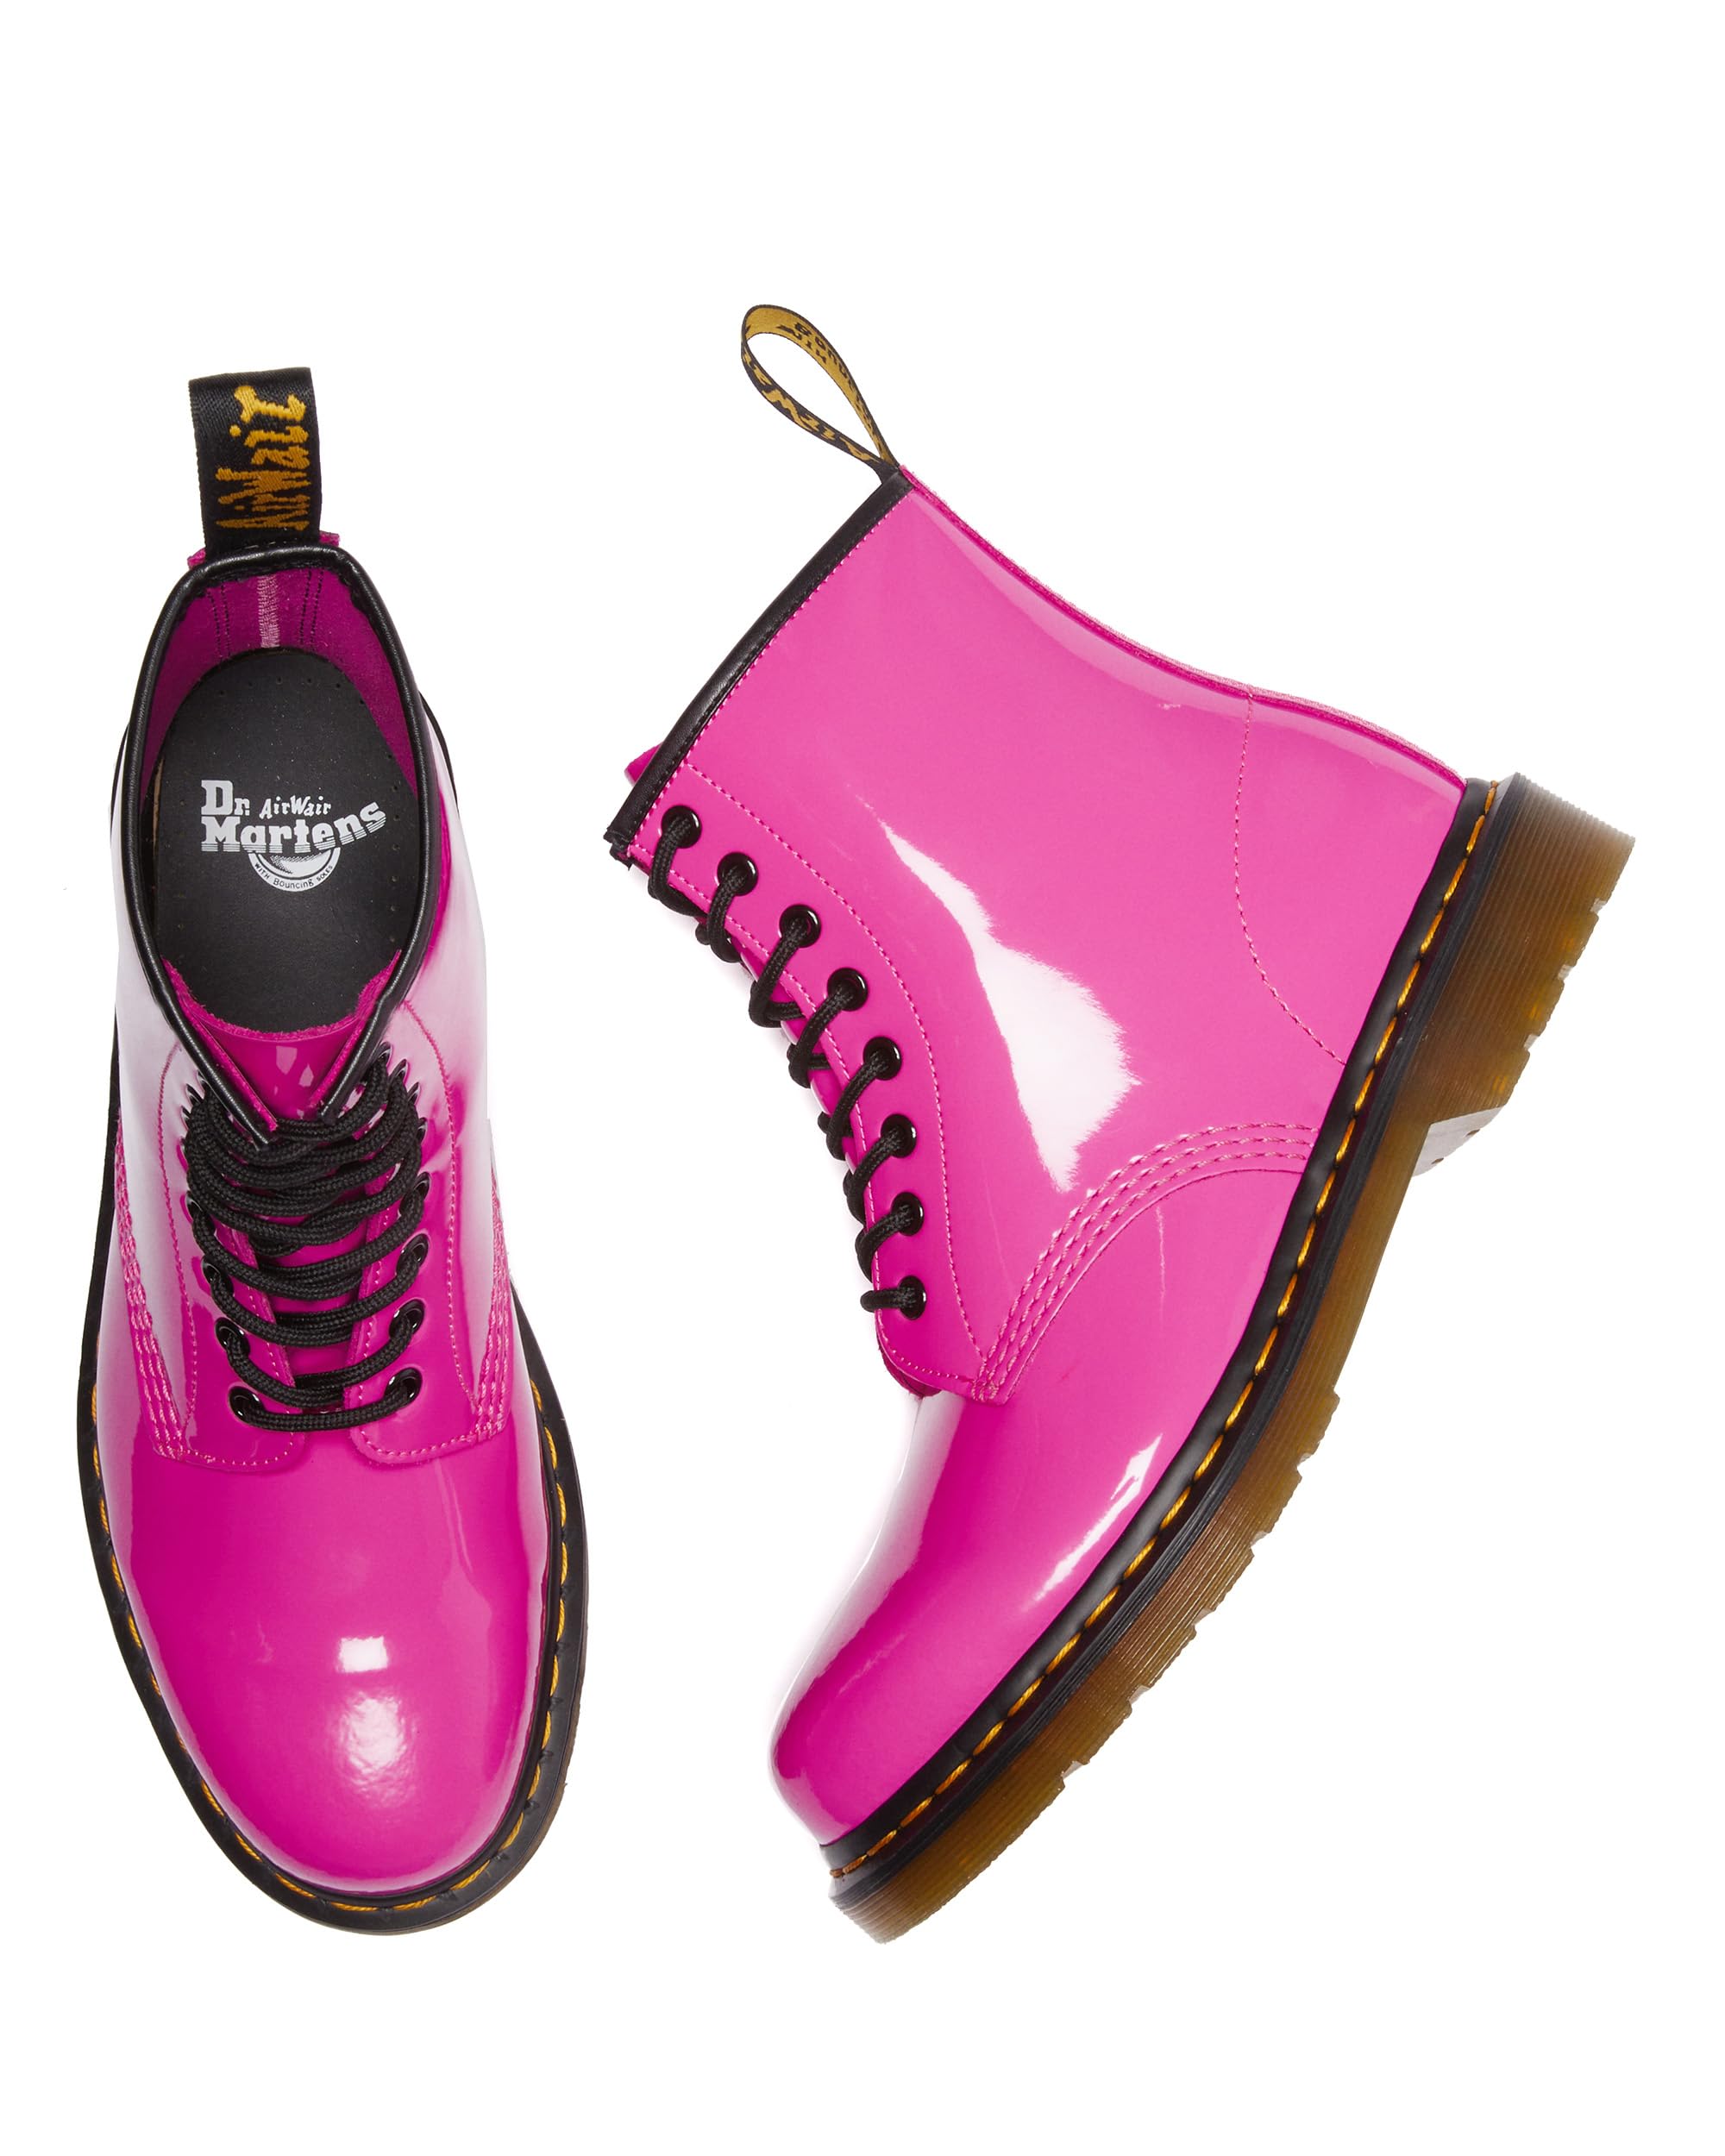 Dr. Martens Unisex-Adult 1460 Patent Lamper Fashion Boot